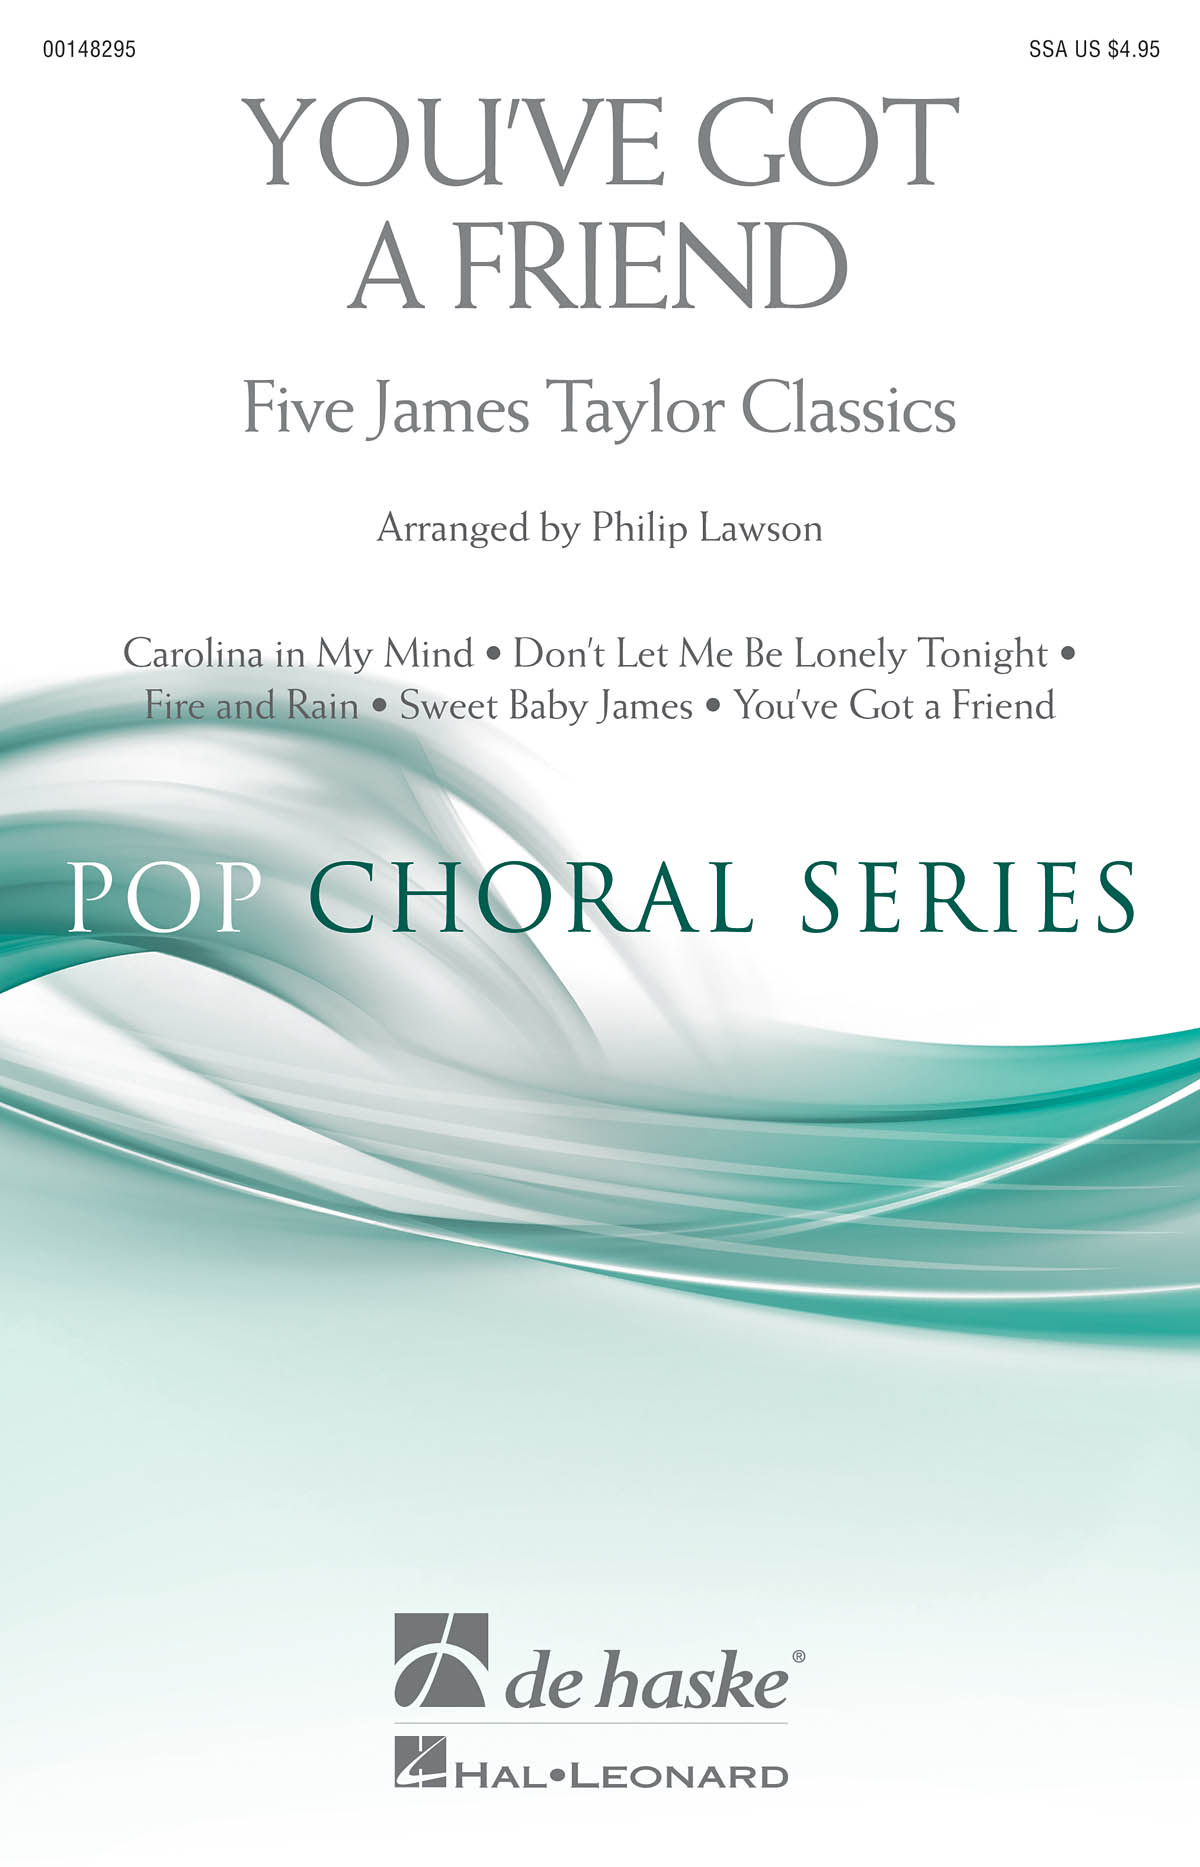 You've Got a Friend - Five James Taylor Classics noty pro sbor SSA